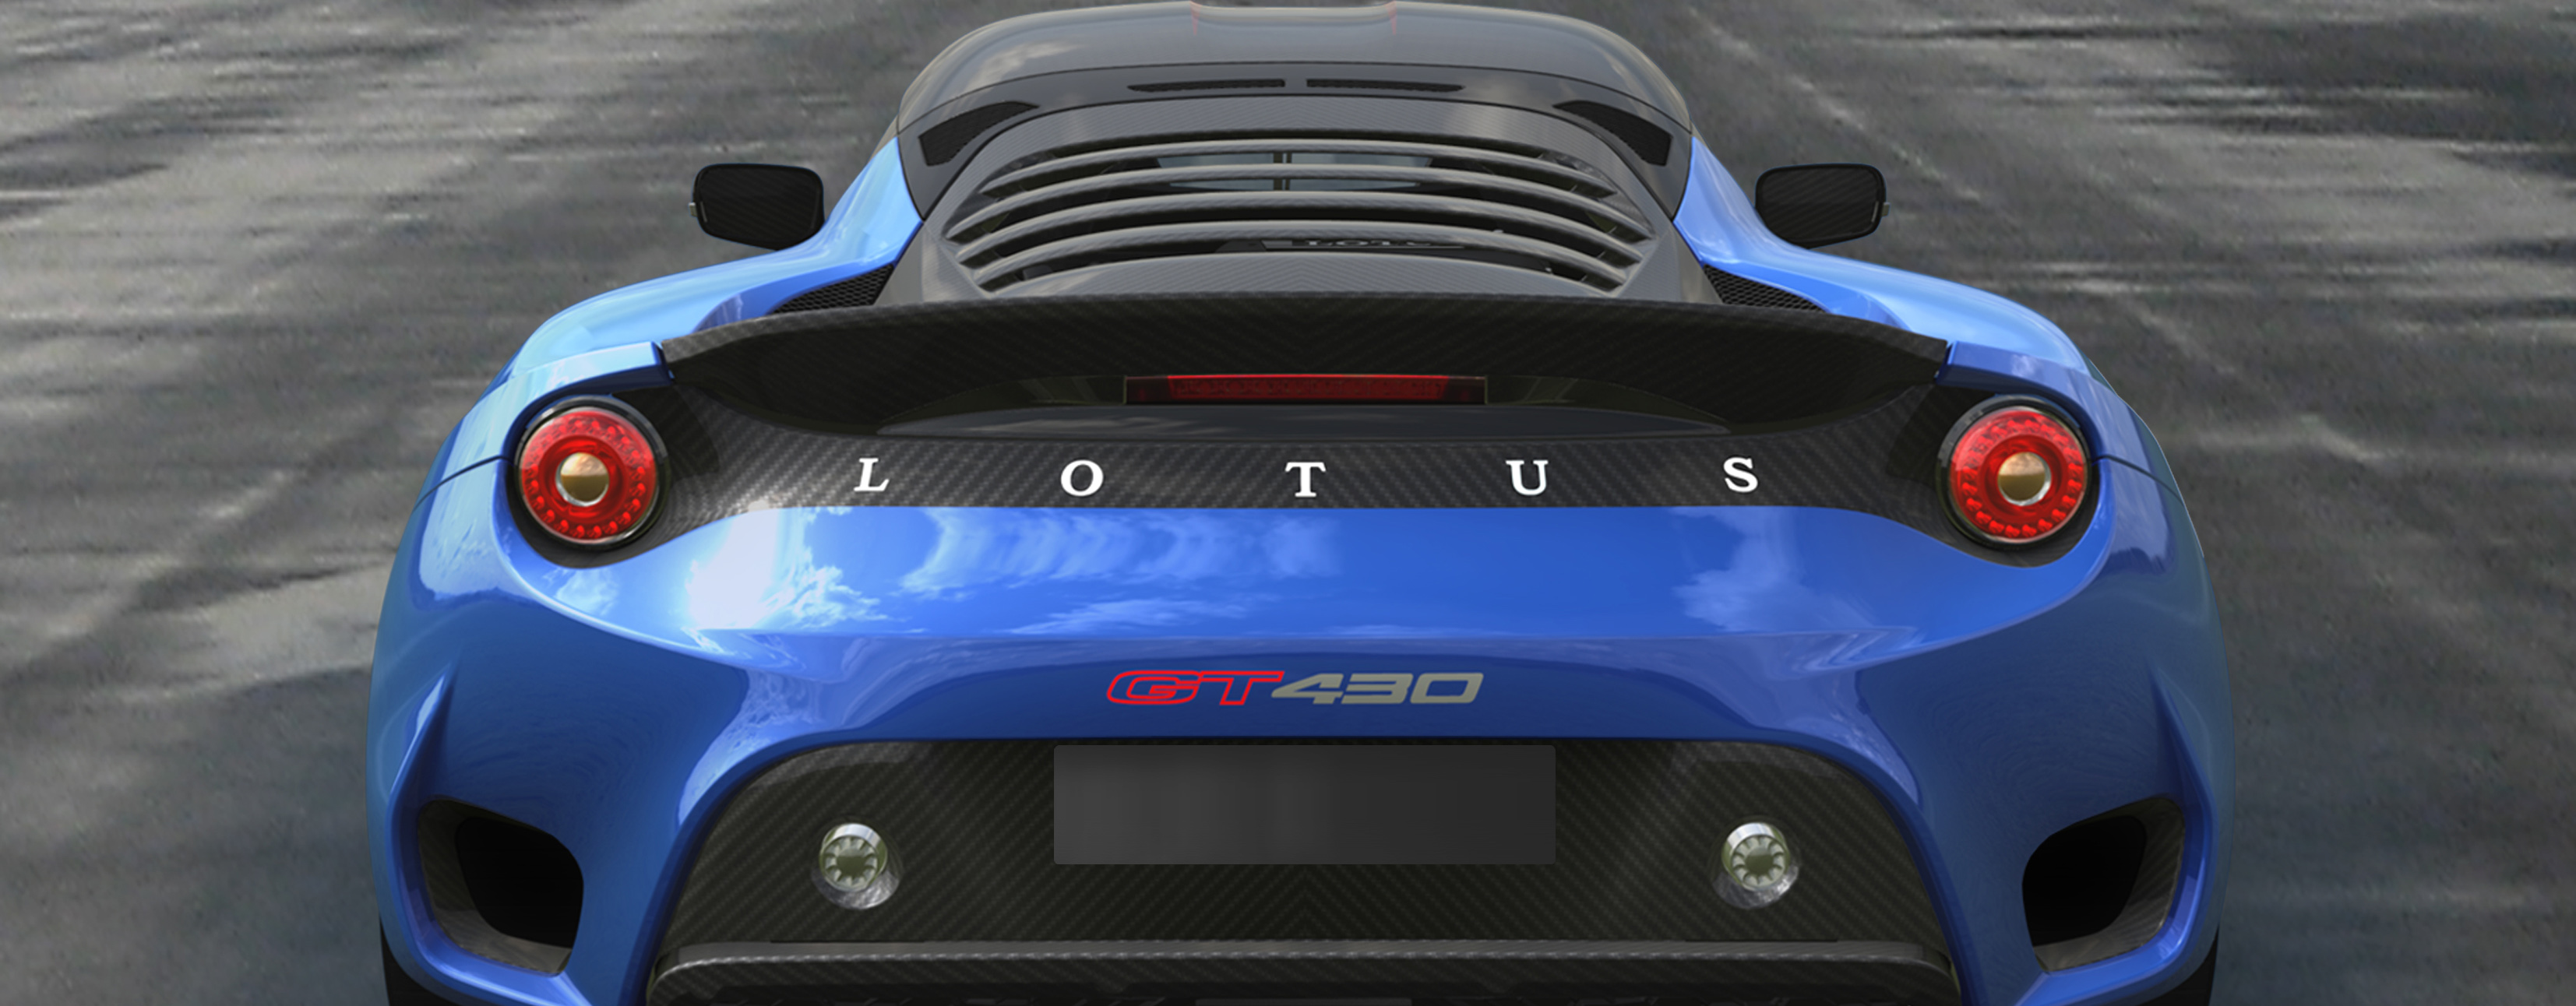 Lotus Evora GT430 Sport: Fastest Road-going Lotus Ever - TrackWorthy